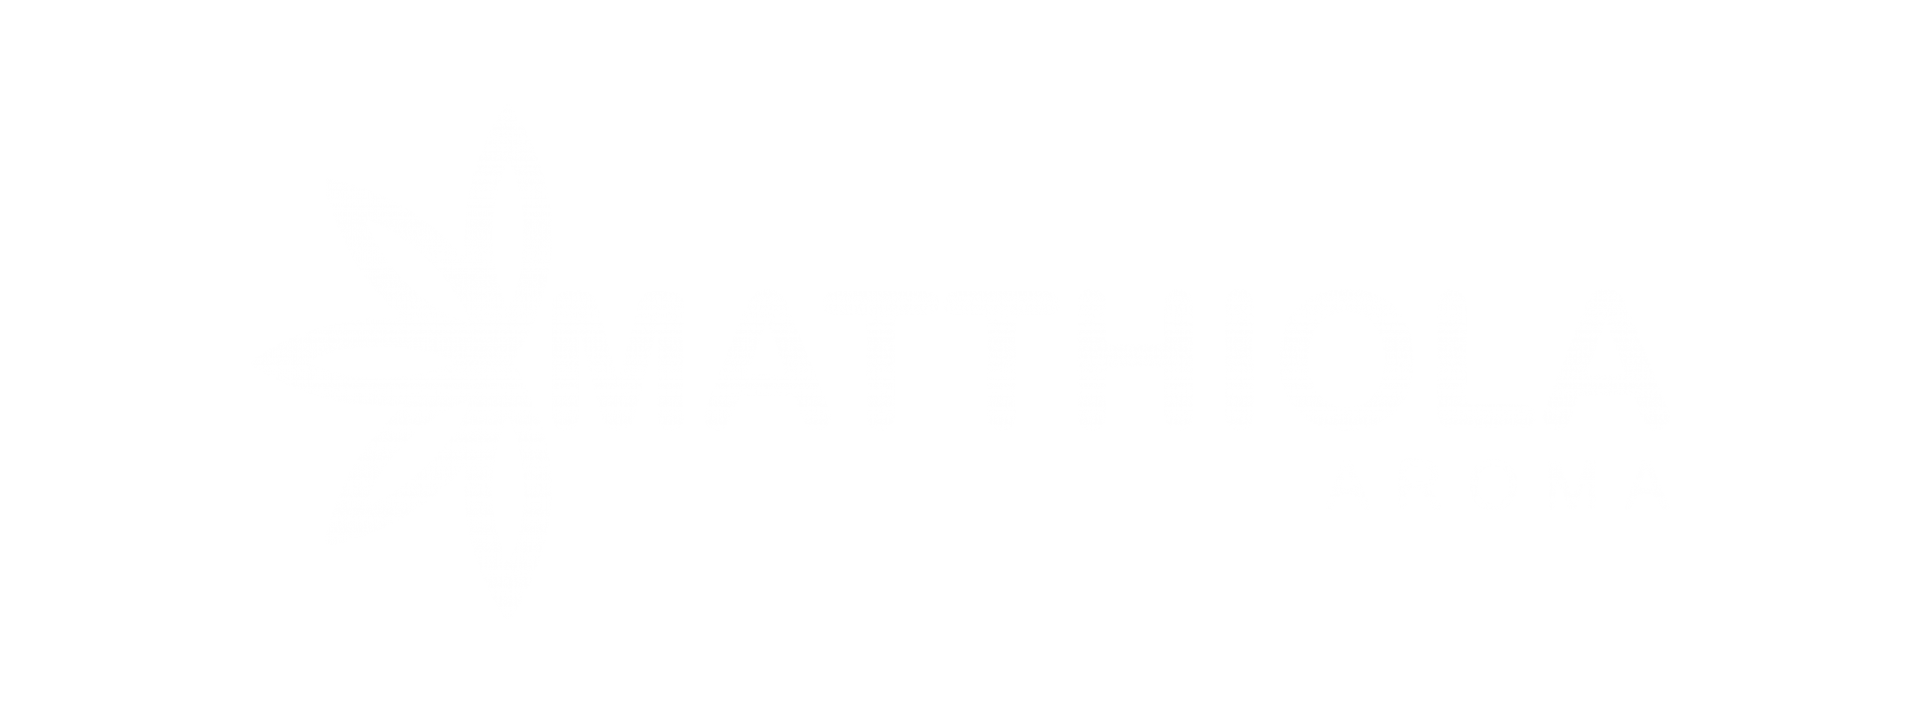 logos webclientes ON_Matthiola